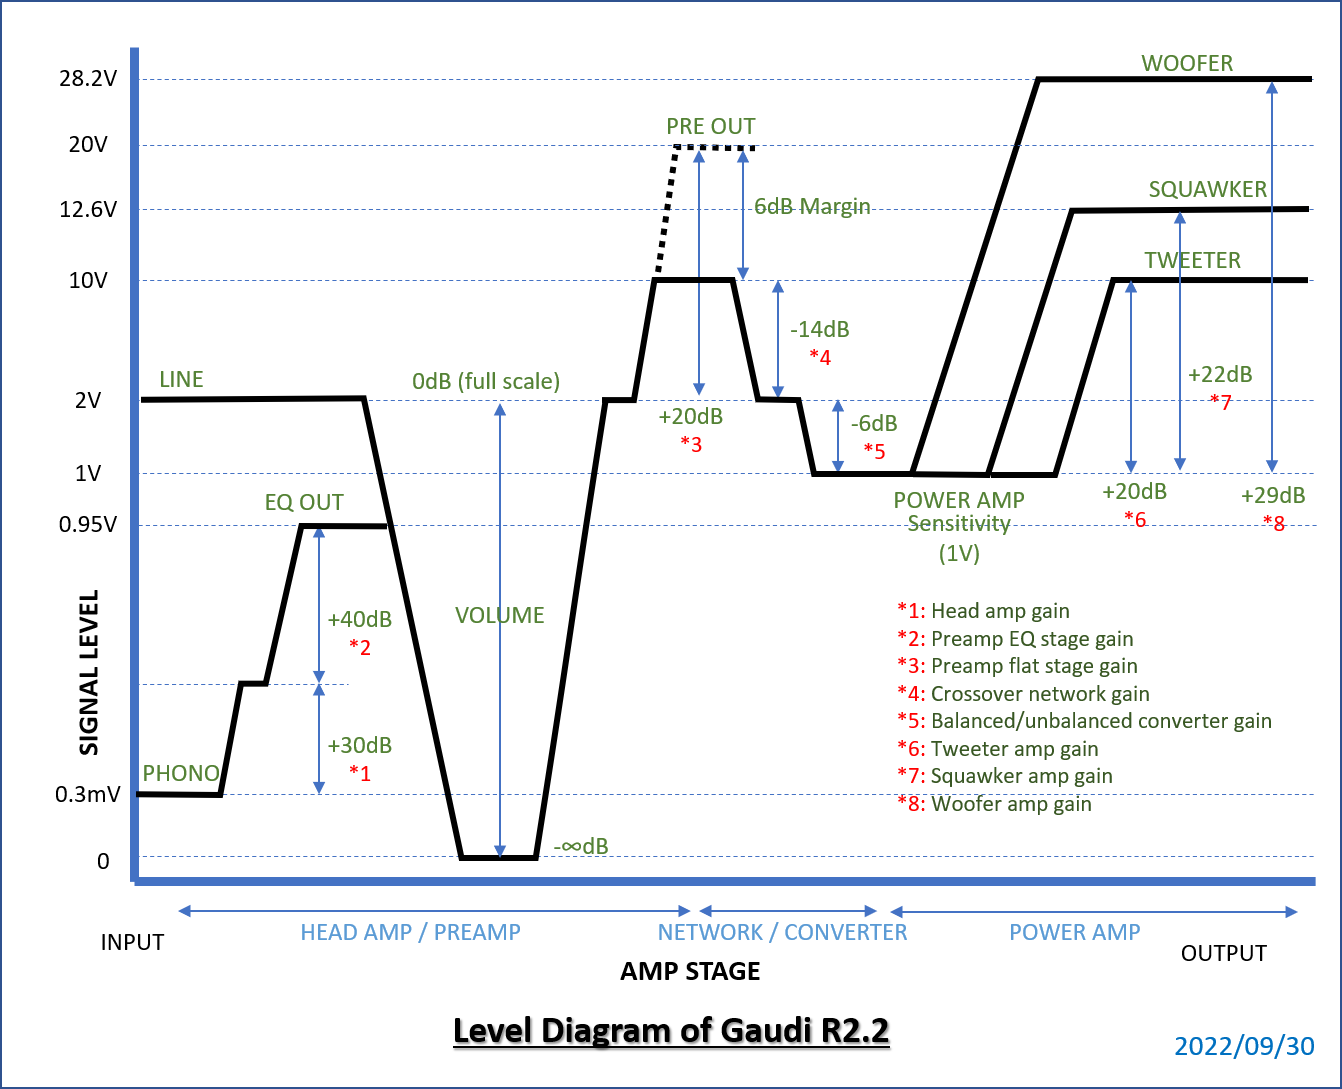 Level Diagram Rev.2.2